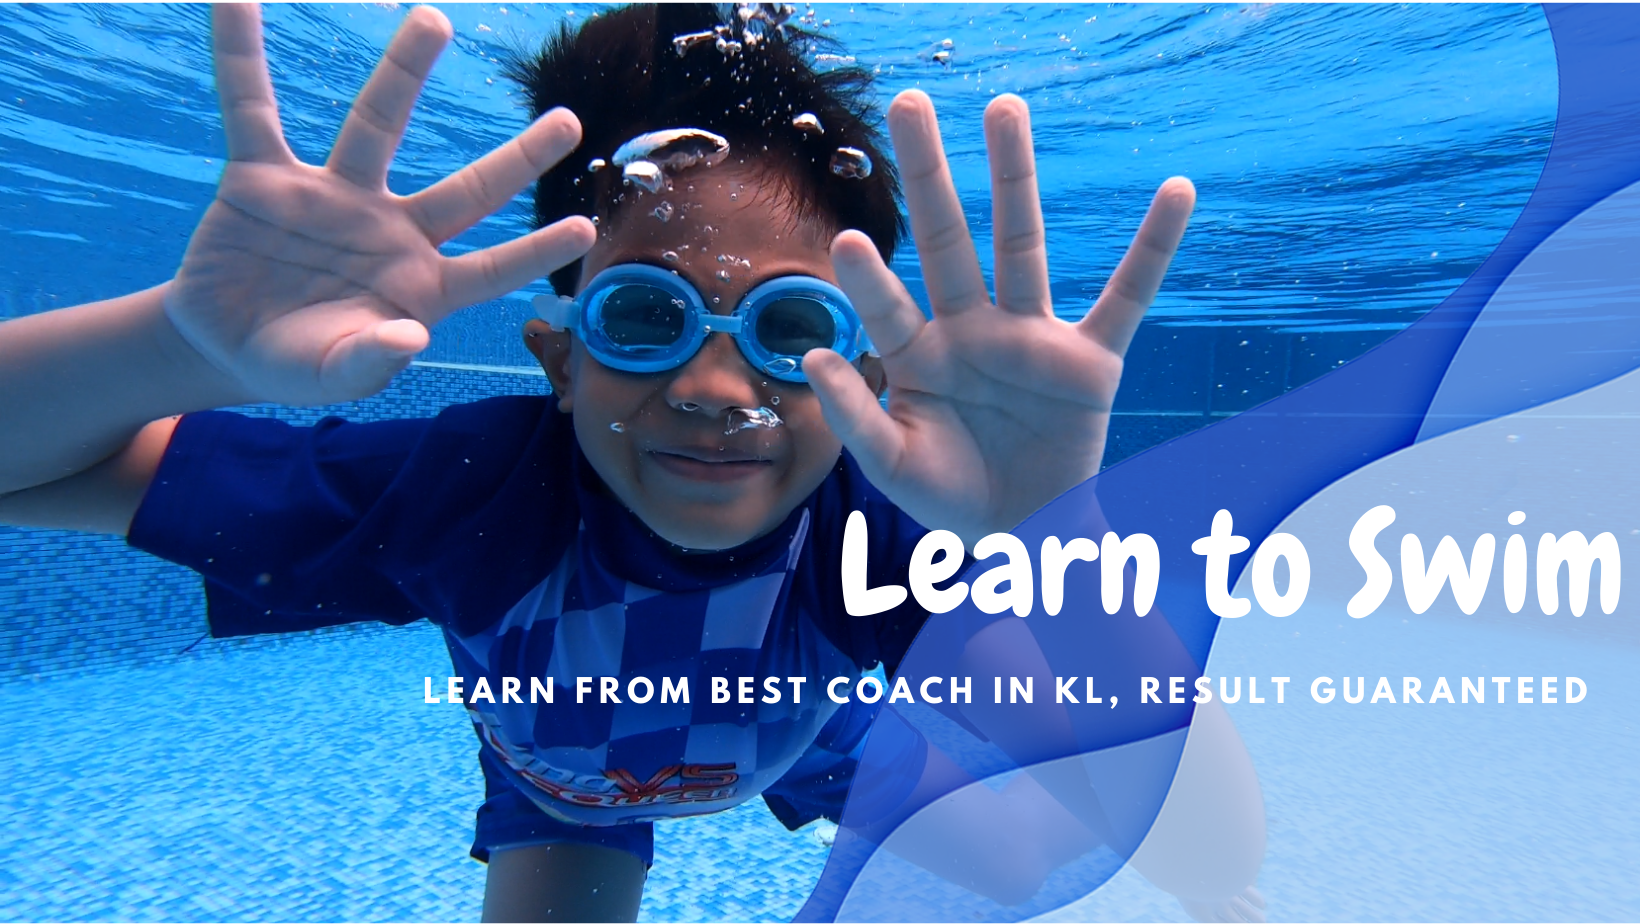 Onsite Private Kid's Swimming Lesson at Seri Kembangan by Swim Up Academy